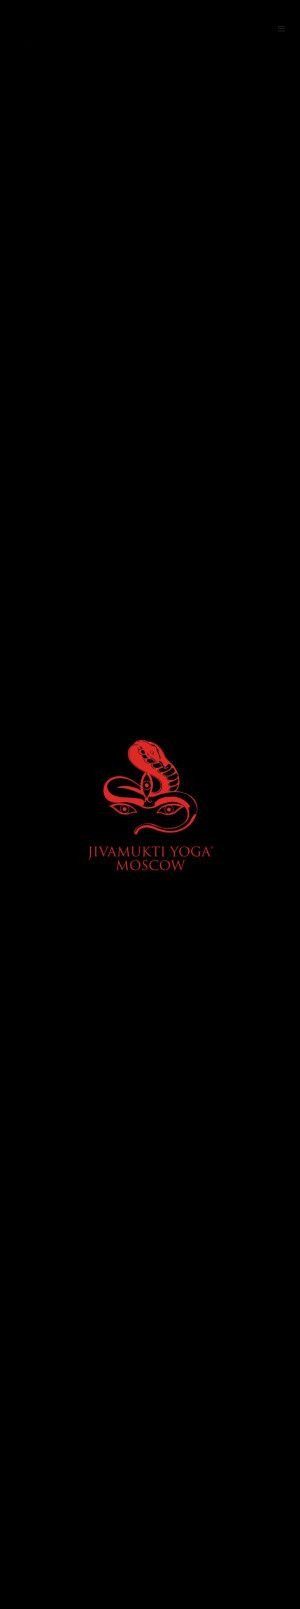 Предпросмотр для www.nymyoga.com — Nym Yoga